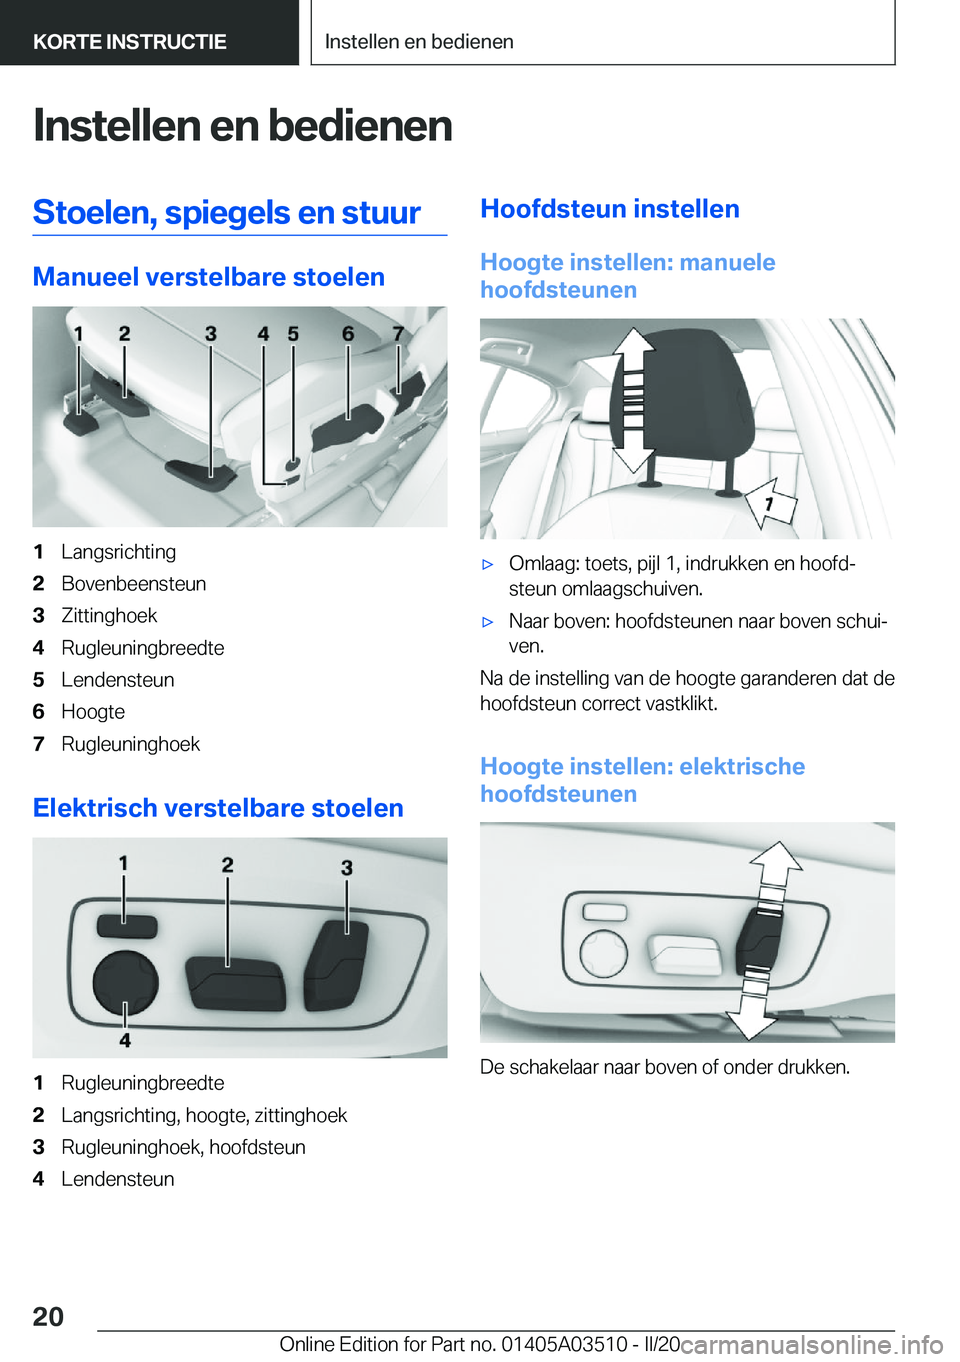 BMW X3 2020  Instructieboekjes (in Dutch) �I�n�s�t�e�l�l�e�n��e�n��b�e�d�i�e�n�e�n�S�t�o�e�l�e�n�,��s�p�i�e�g�e�l�s��e�n��s�t�u�u�r
�M�a�n�u�e�e�l��v�e�r�s�t�e�l�b�a�r�e��s�t�o�e�l�e�n
�1�L�a�n�g�s�r�i�c�h�t�i�n�g�2�B�o�v�e�n�b�e�e�n�s